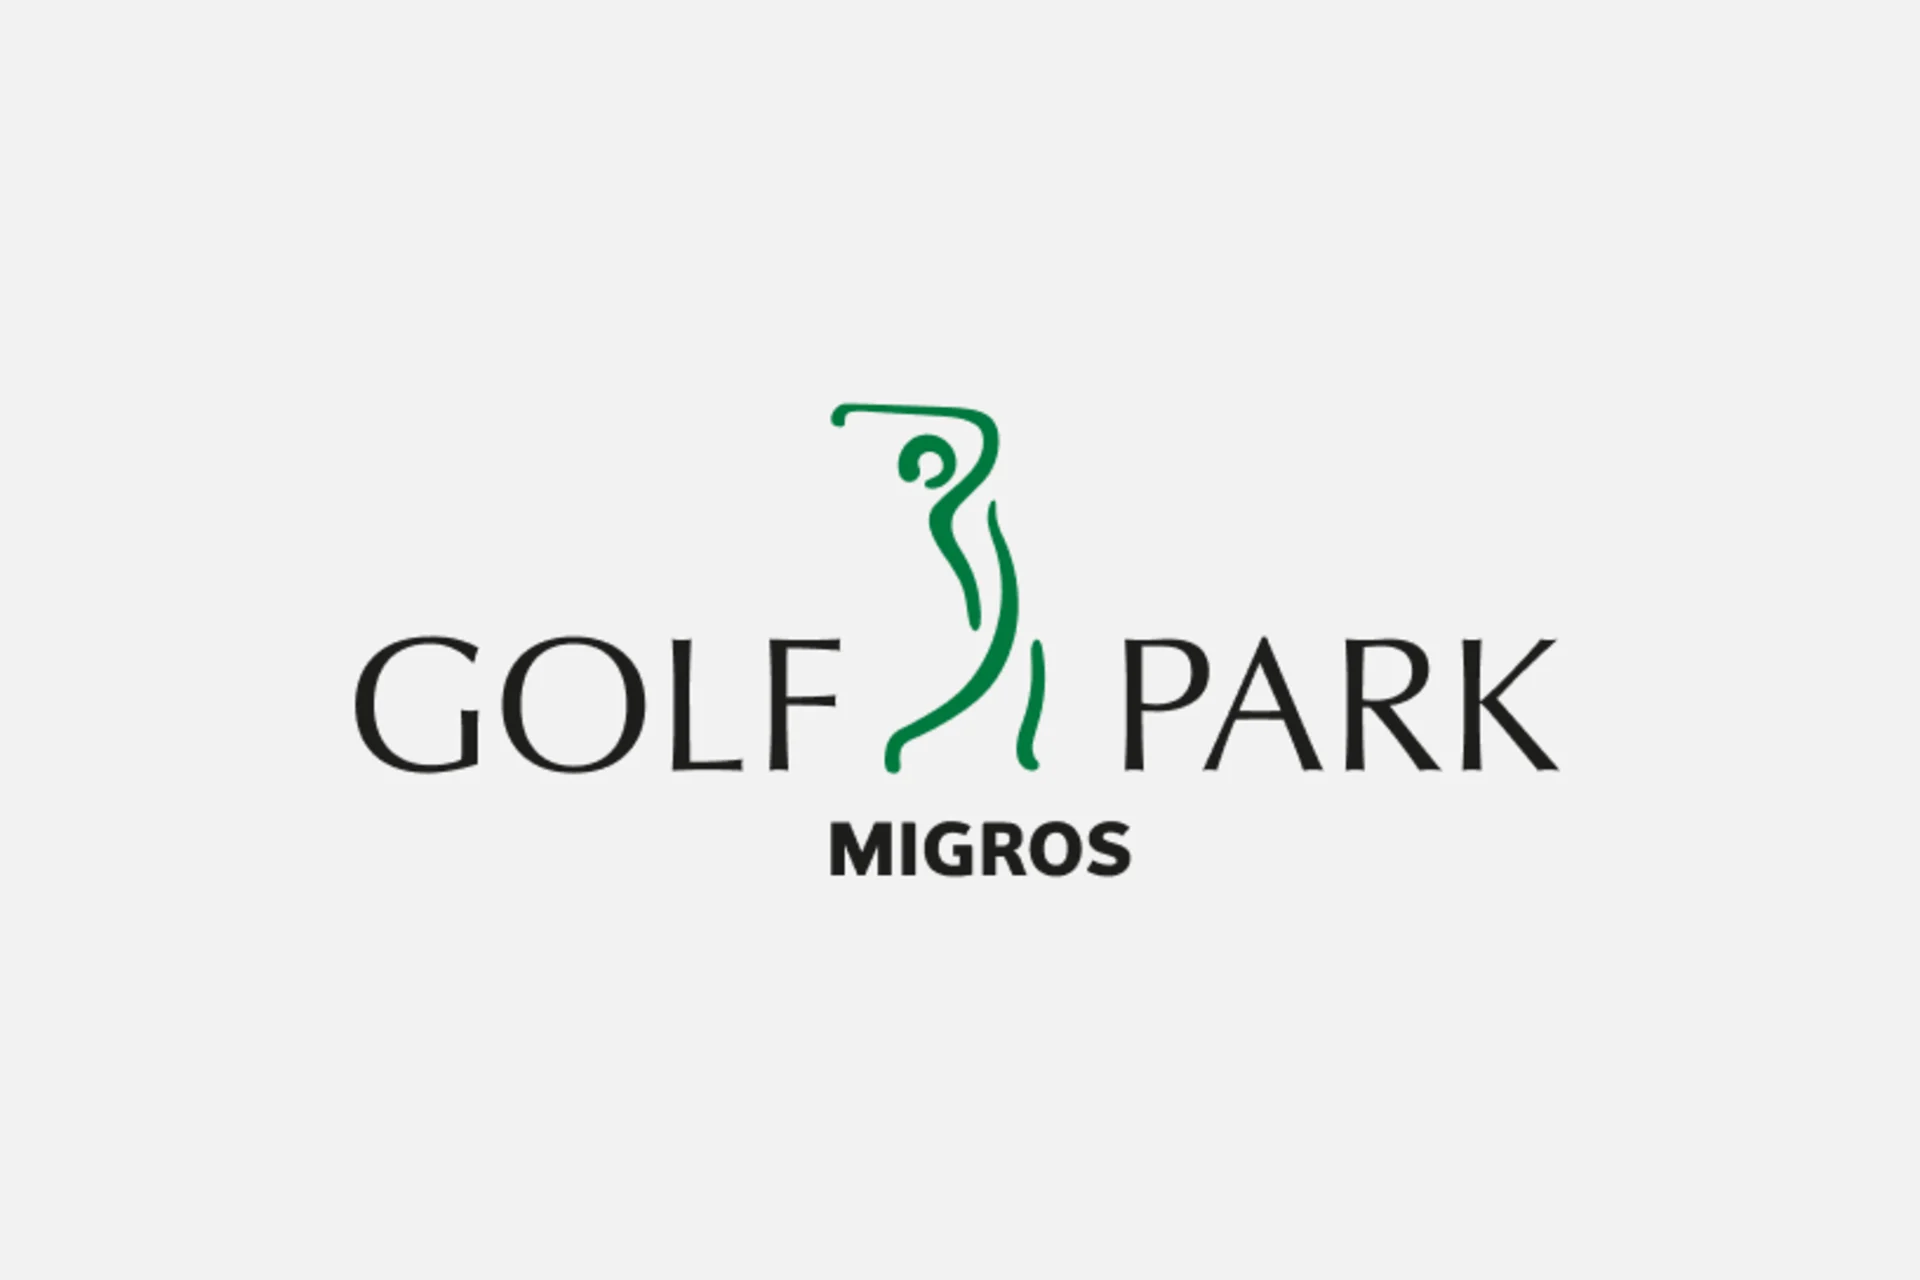 Migros Golfpark logo